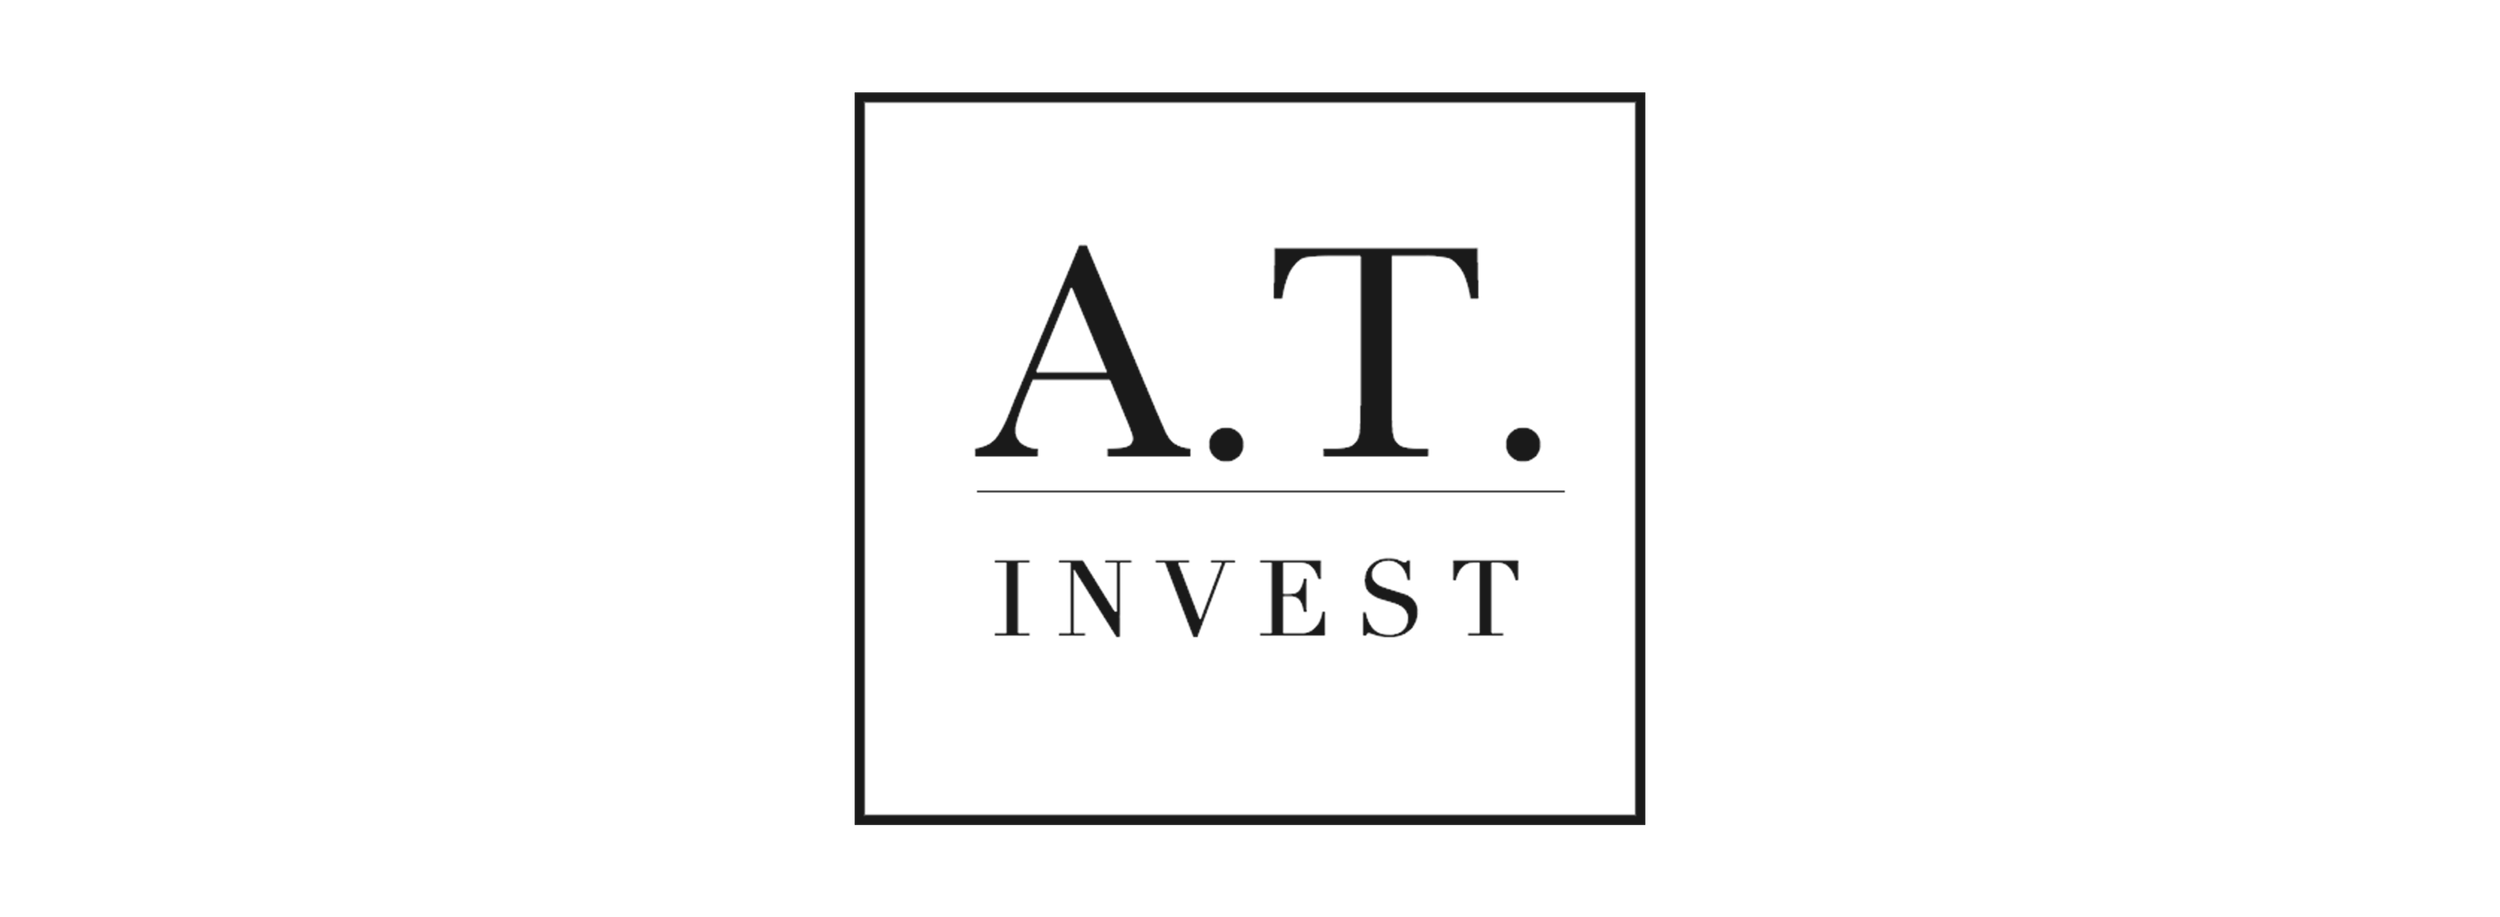 Klanten_Update_2AT-Invest.png